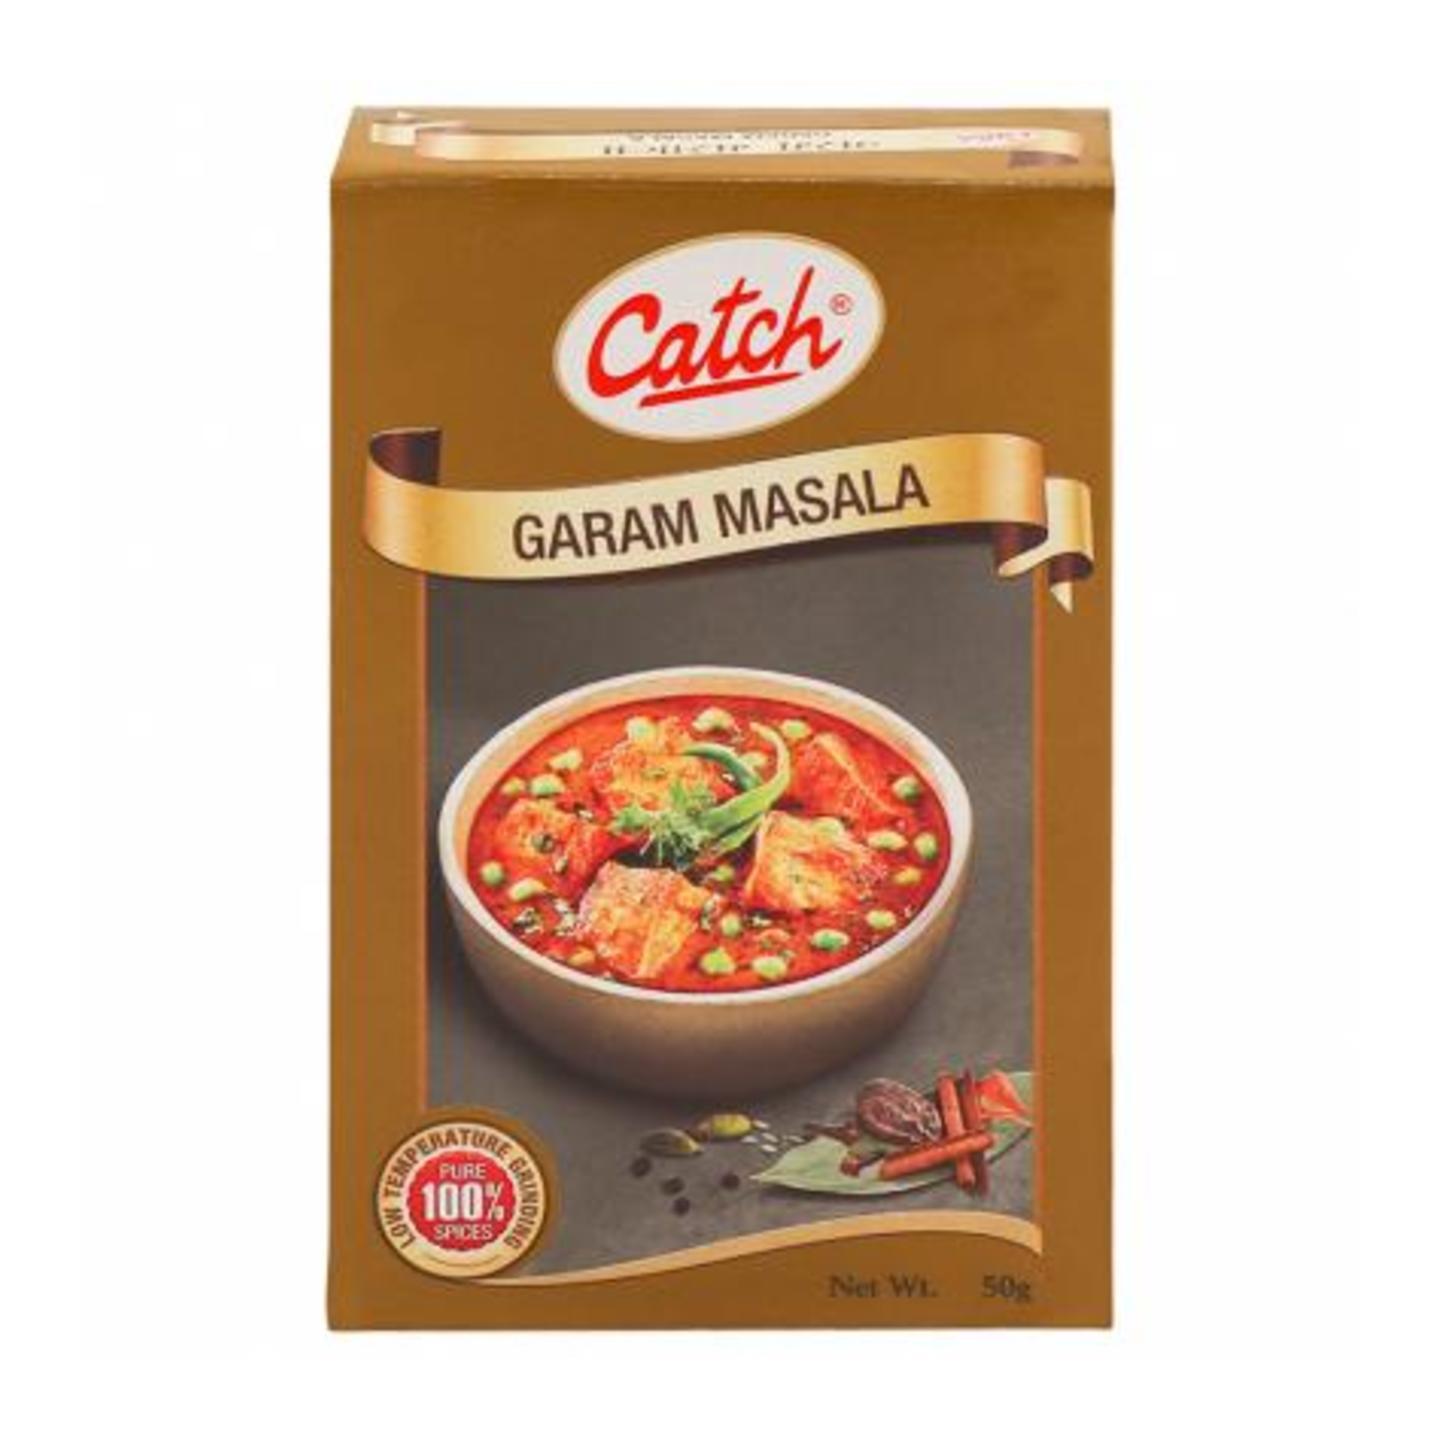 Catch Garam Masala 50 g PMBM 0.044.8